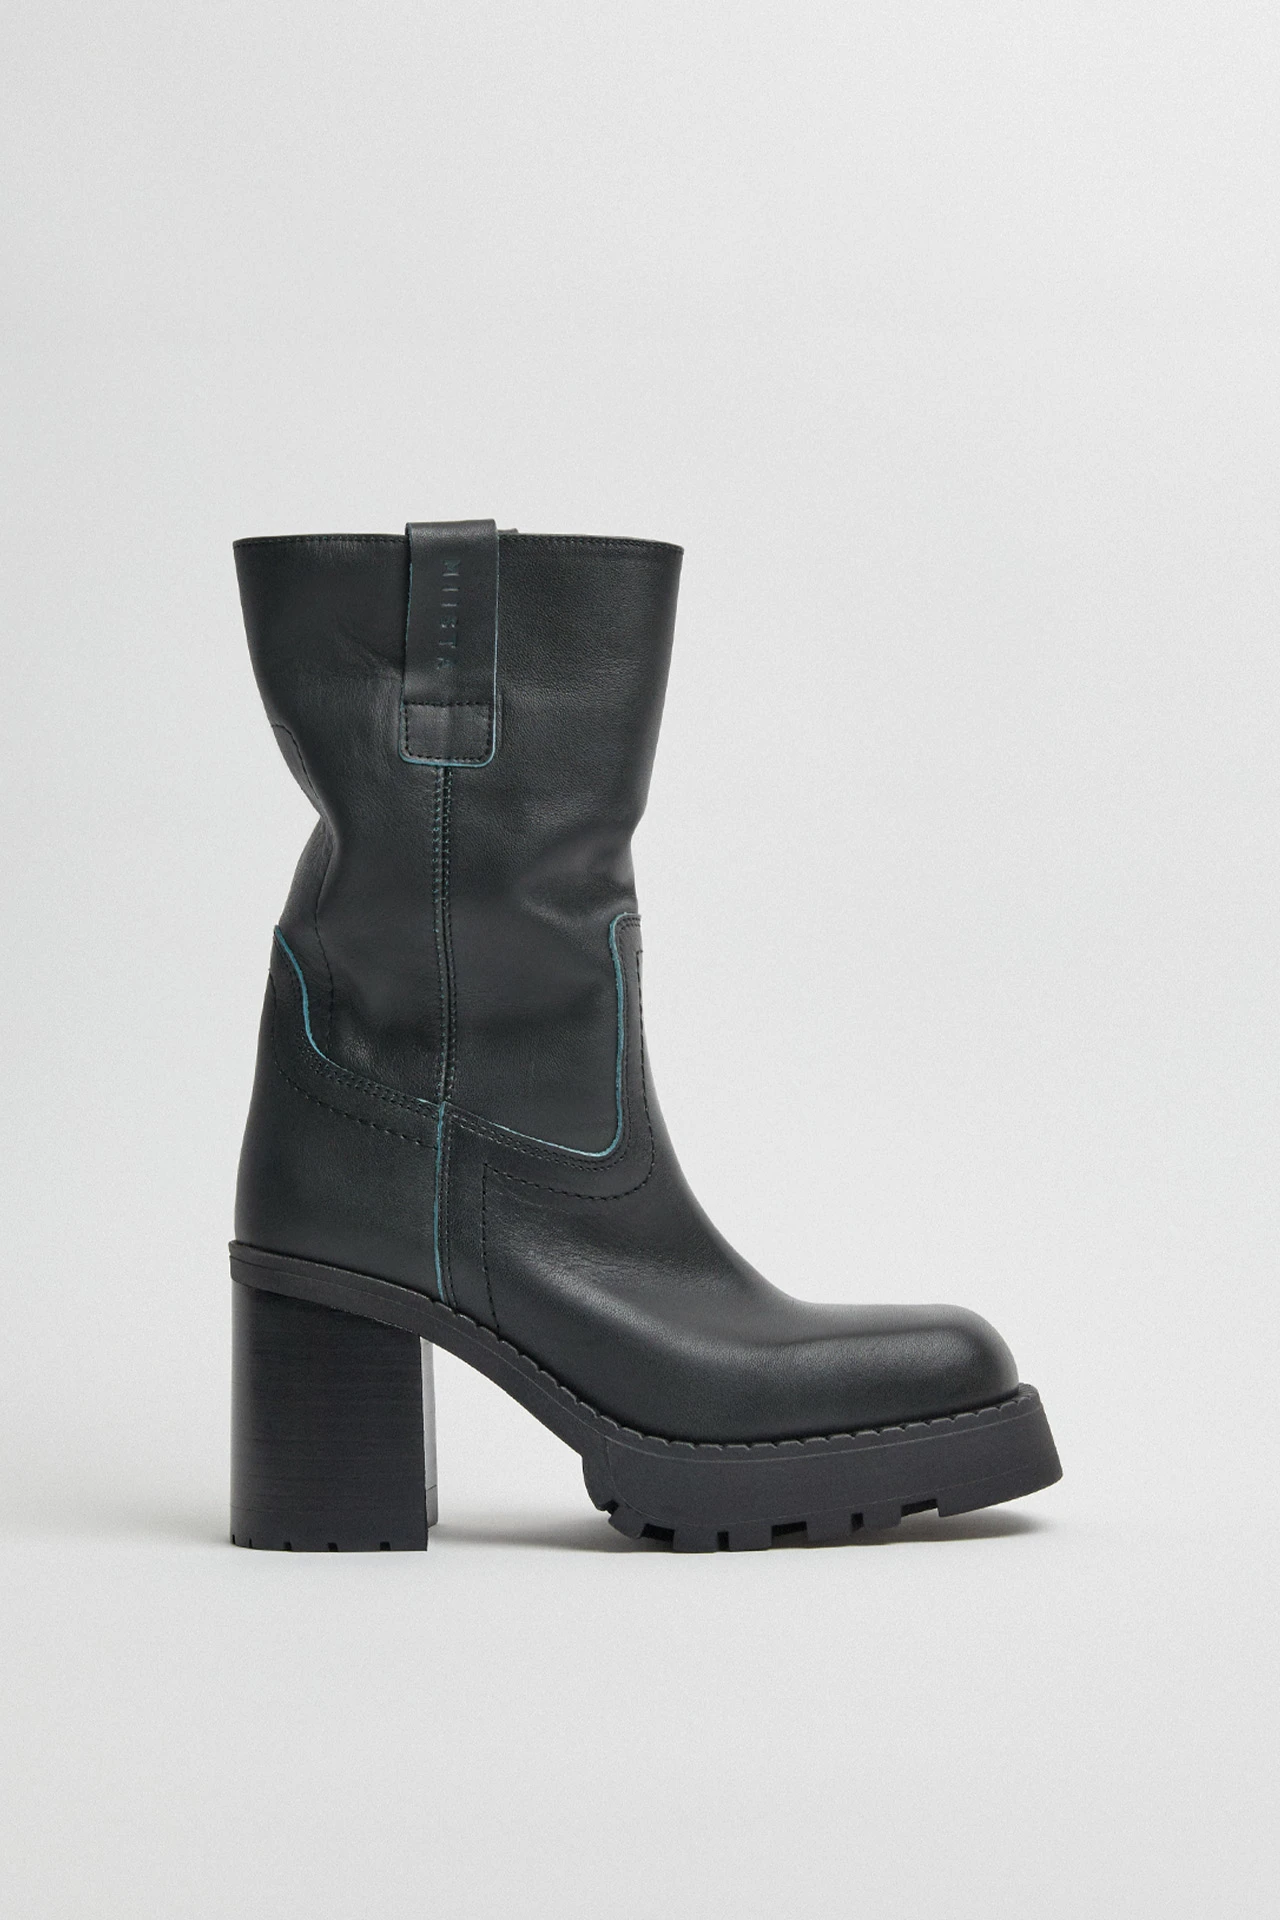 E8-daiane-blue-boots-02